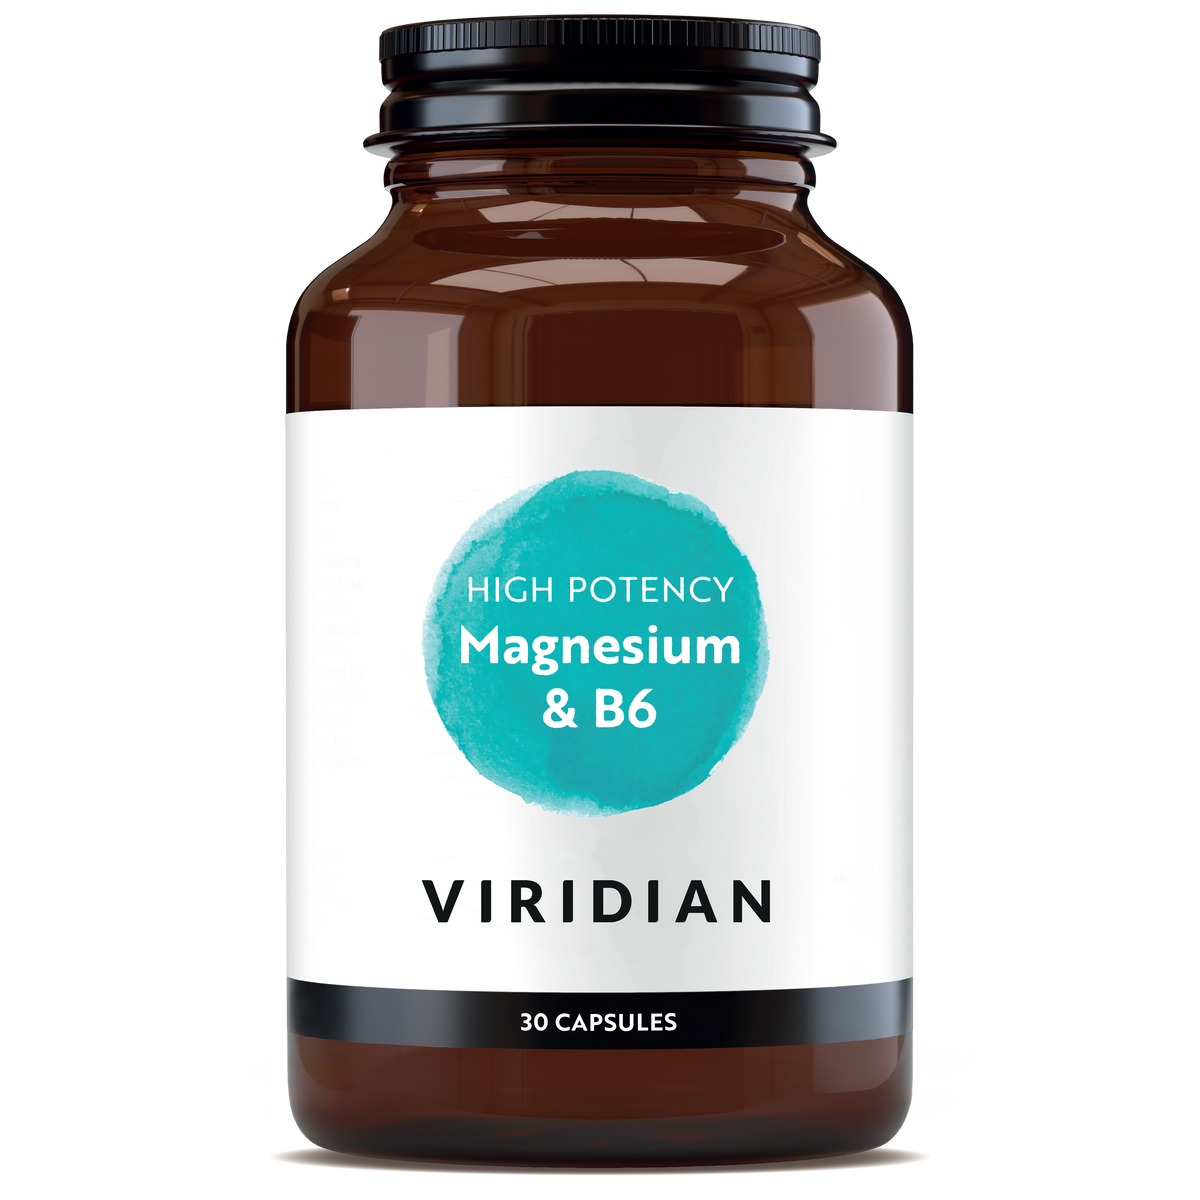 Viridian High Potency Magnesium & B6 30 capsules